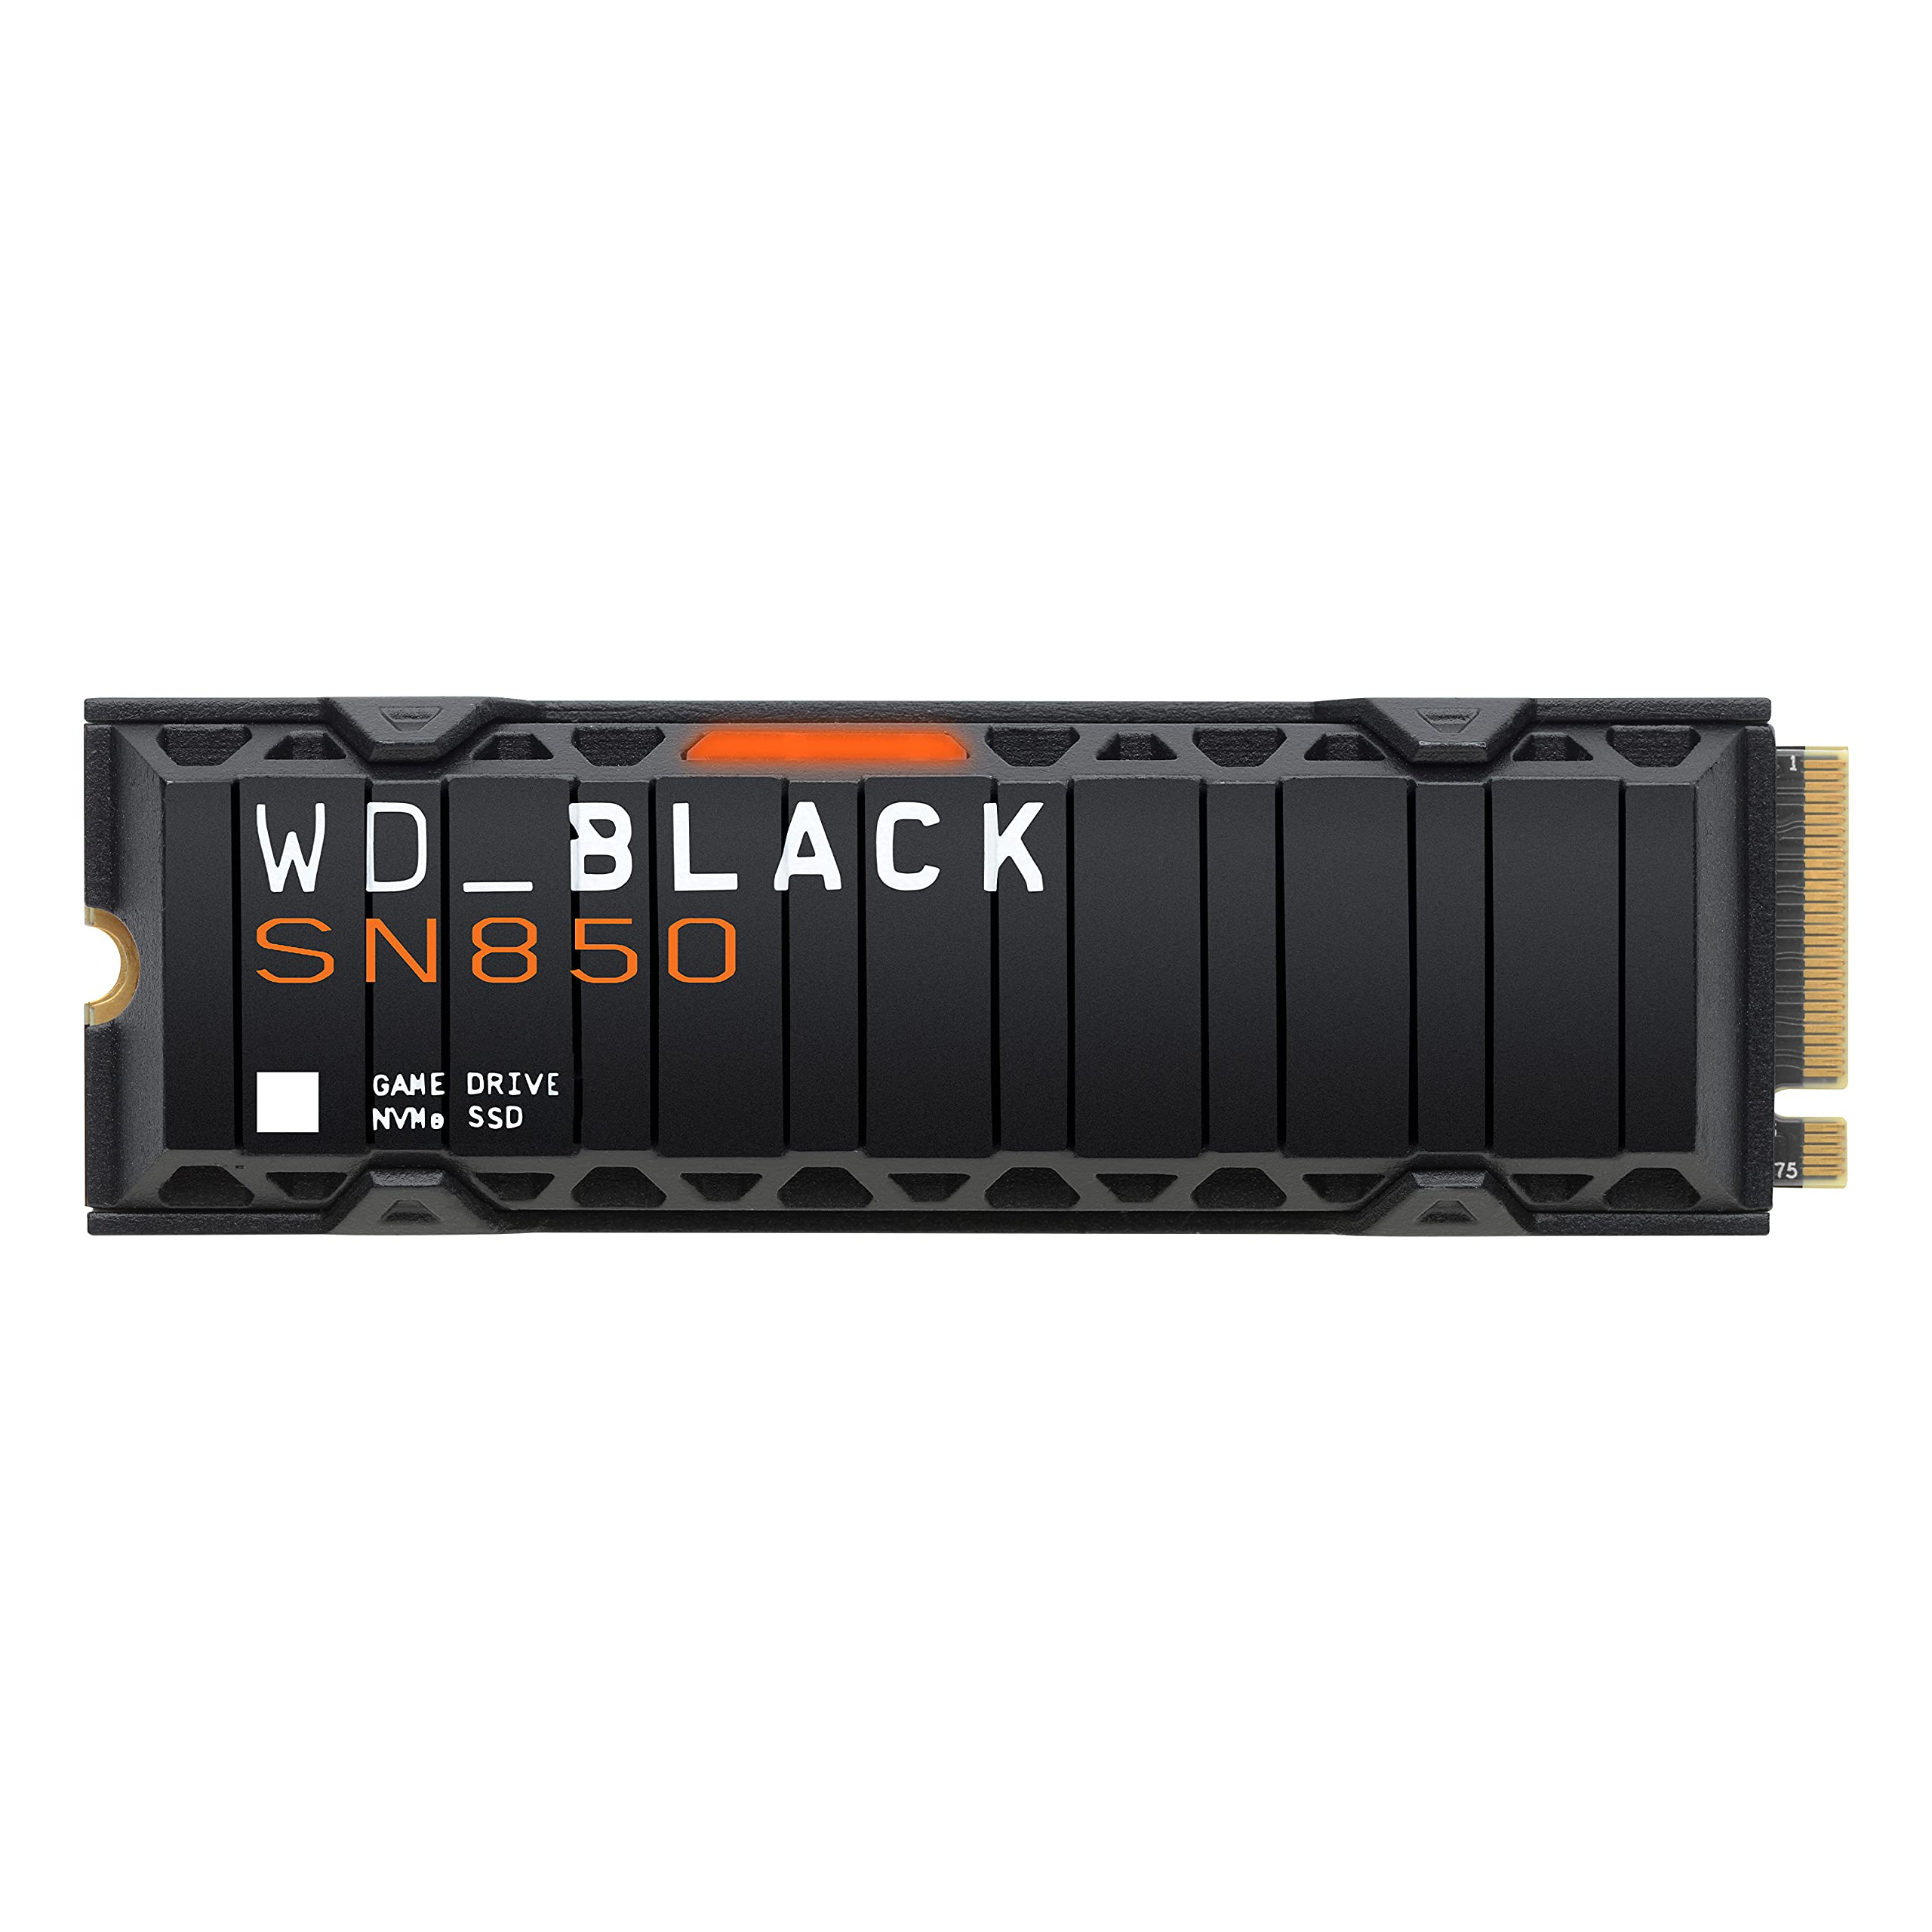 1TB WD Black SN850 NVMe M.2 PCIe Internal SSD w/ Heatsink $80 + Free Shipping